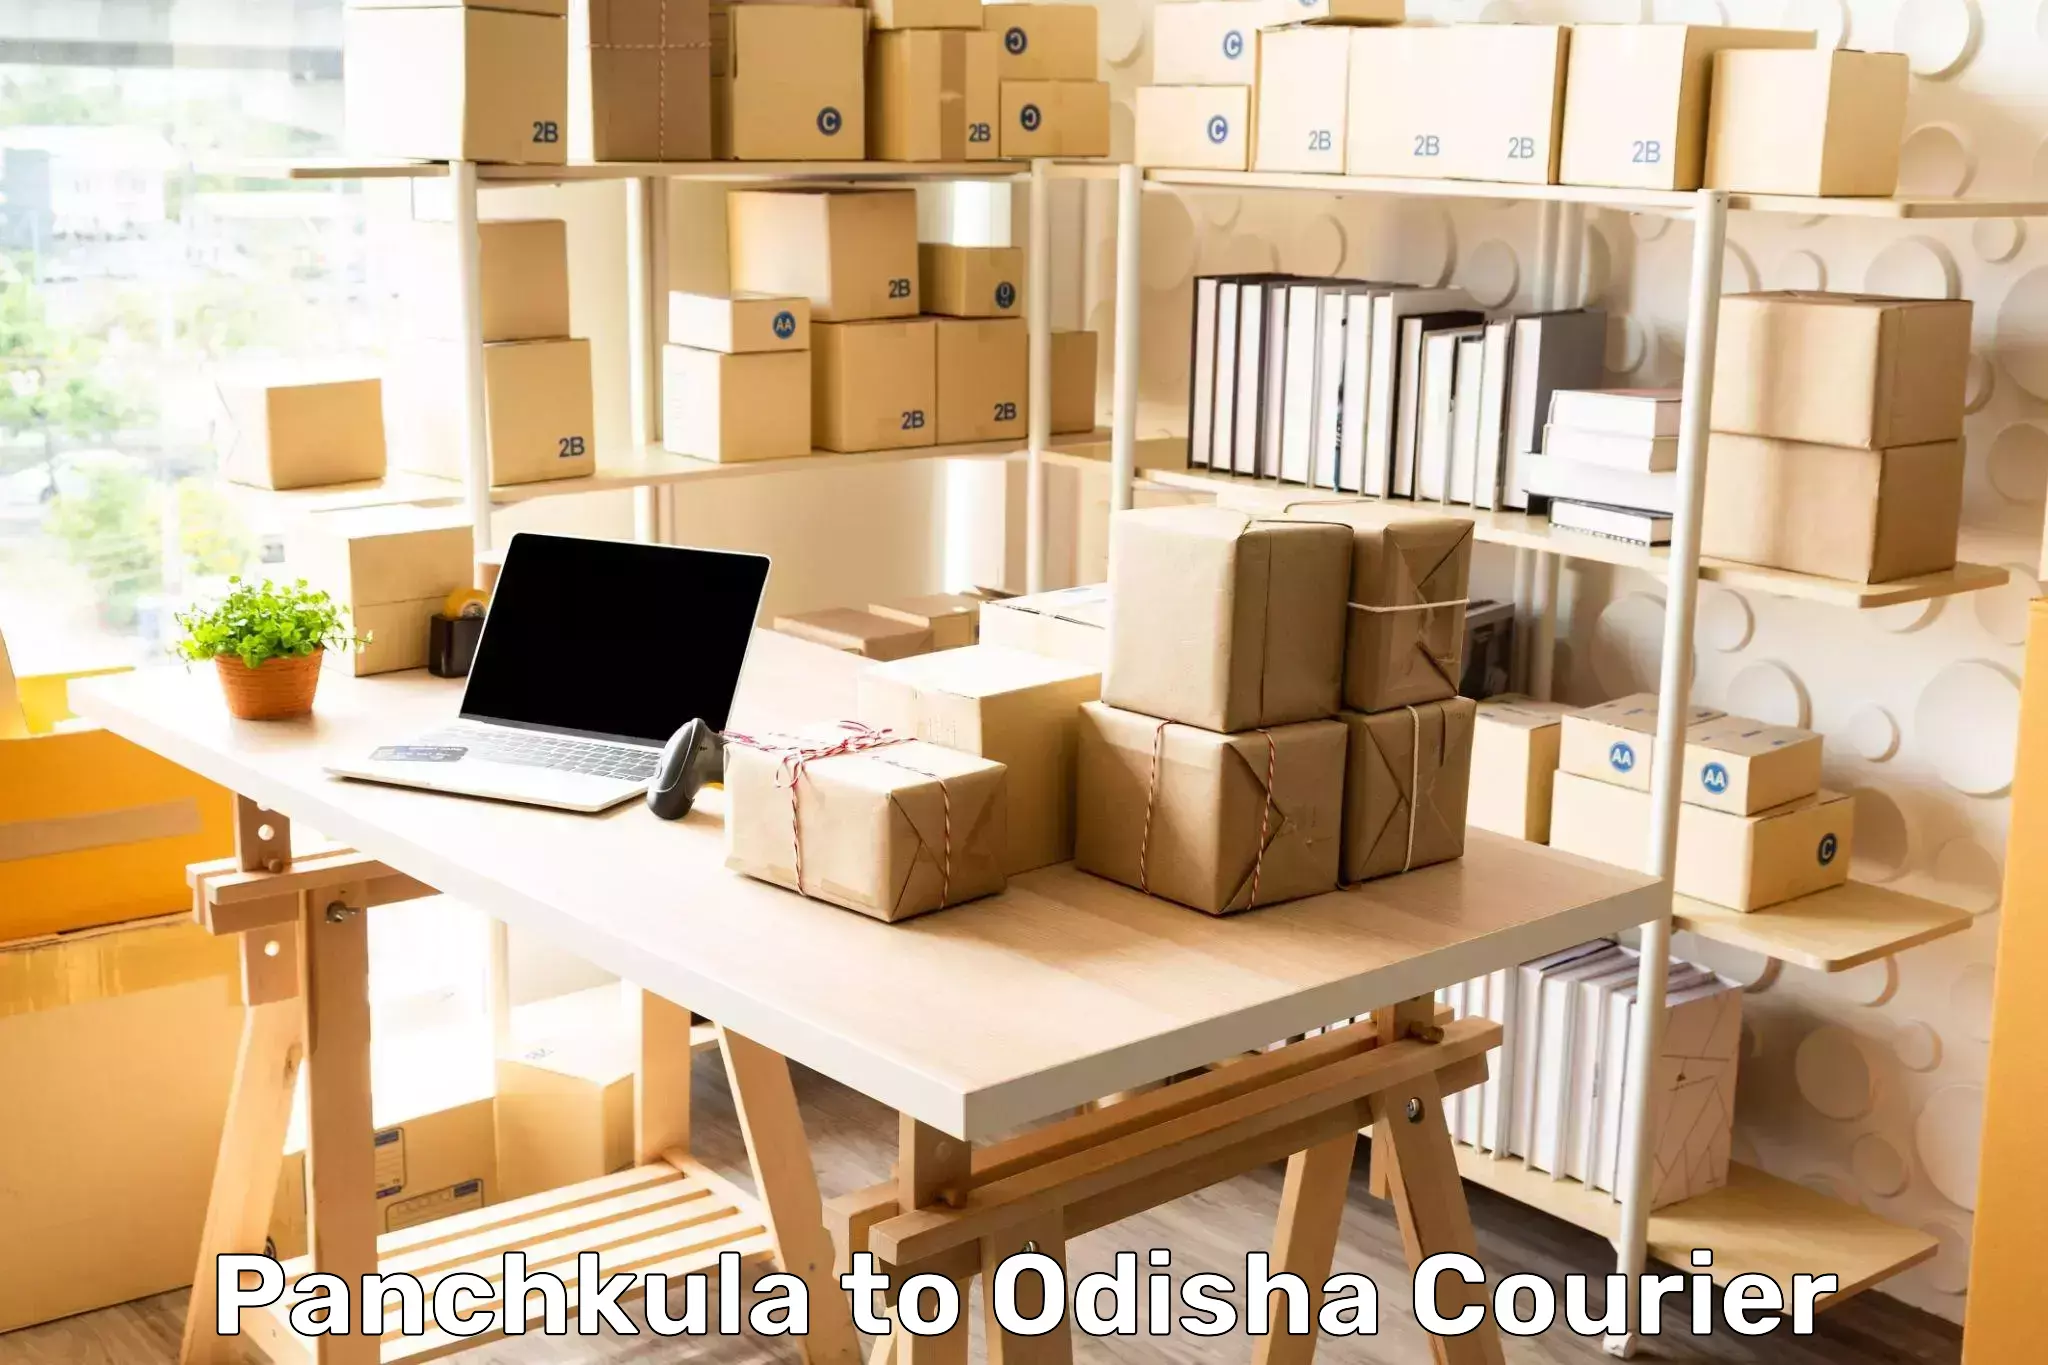 Courier service comparison Panchkula to Odisha